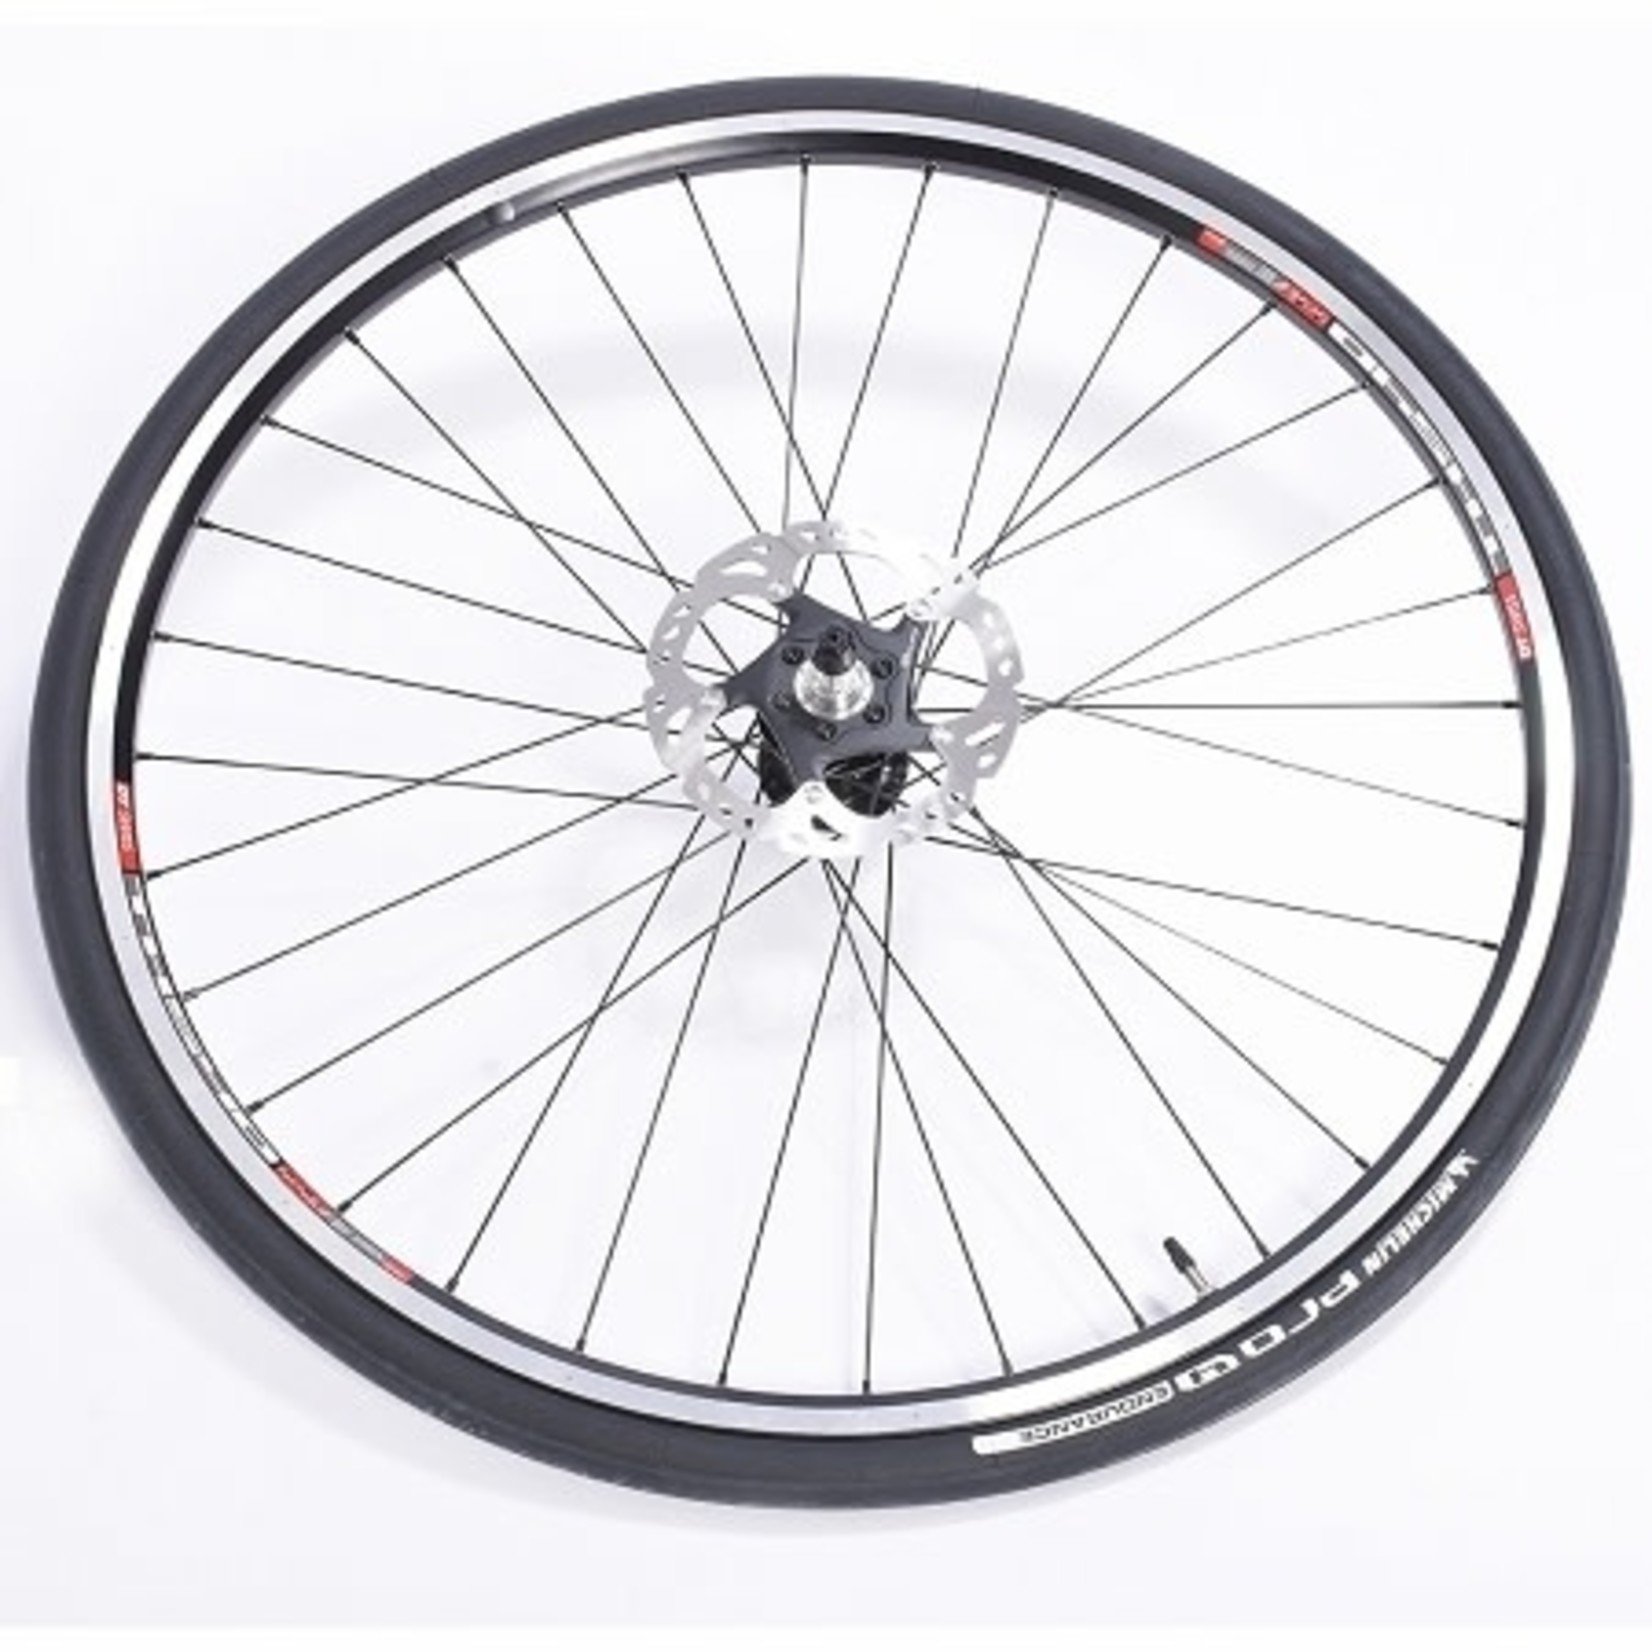 Custom Built Road bike wheels - Disc Brake - Aluminum Clincher